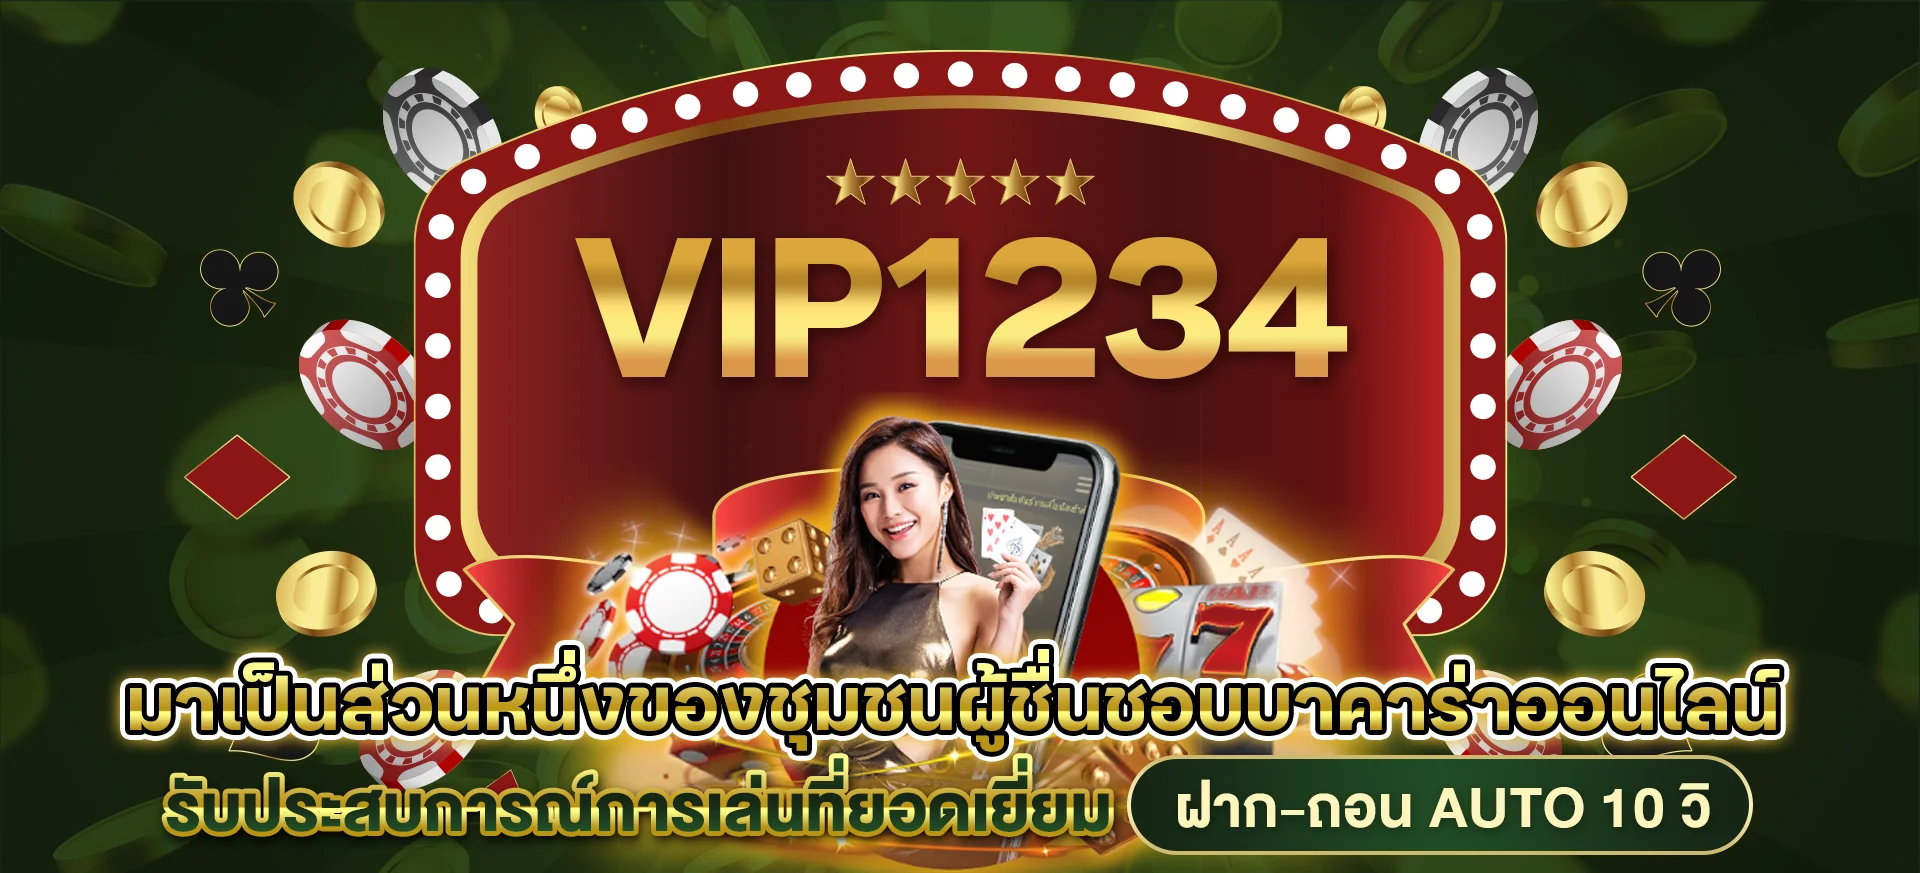 VIP1234